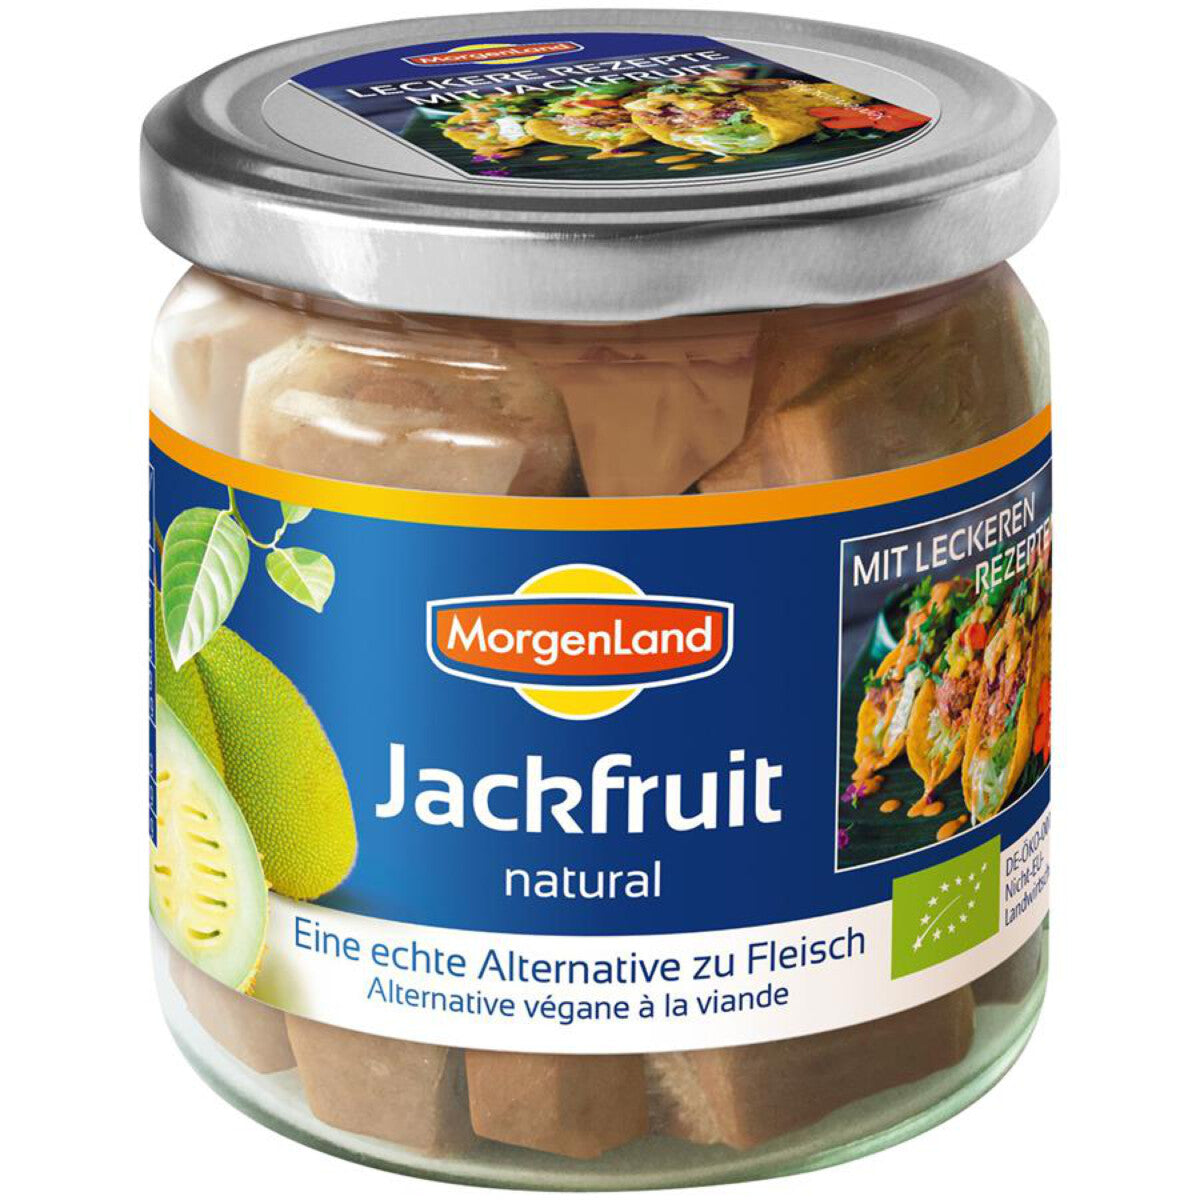 MORGENLAND Jackfruit natural - 180 g